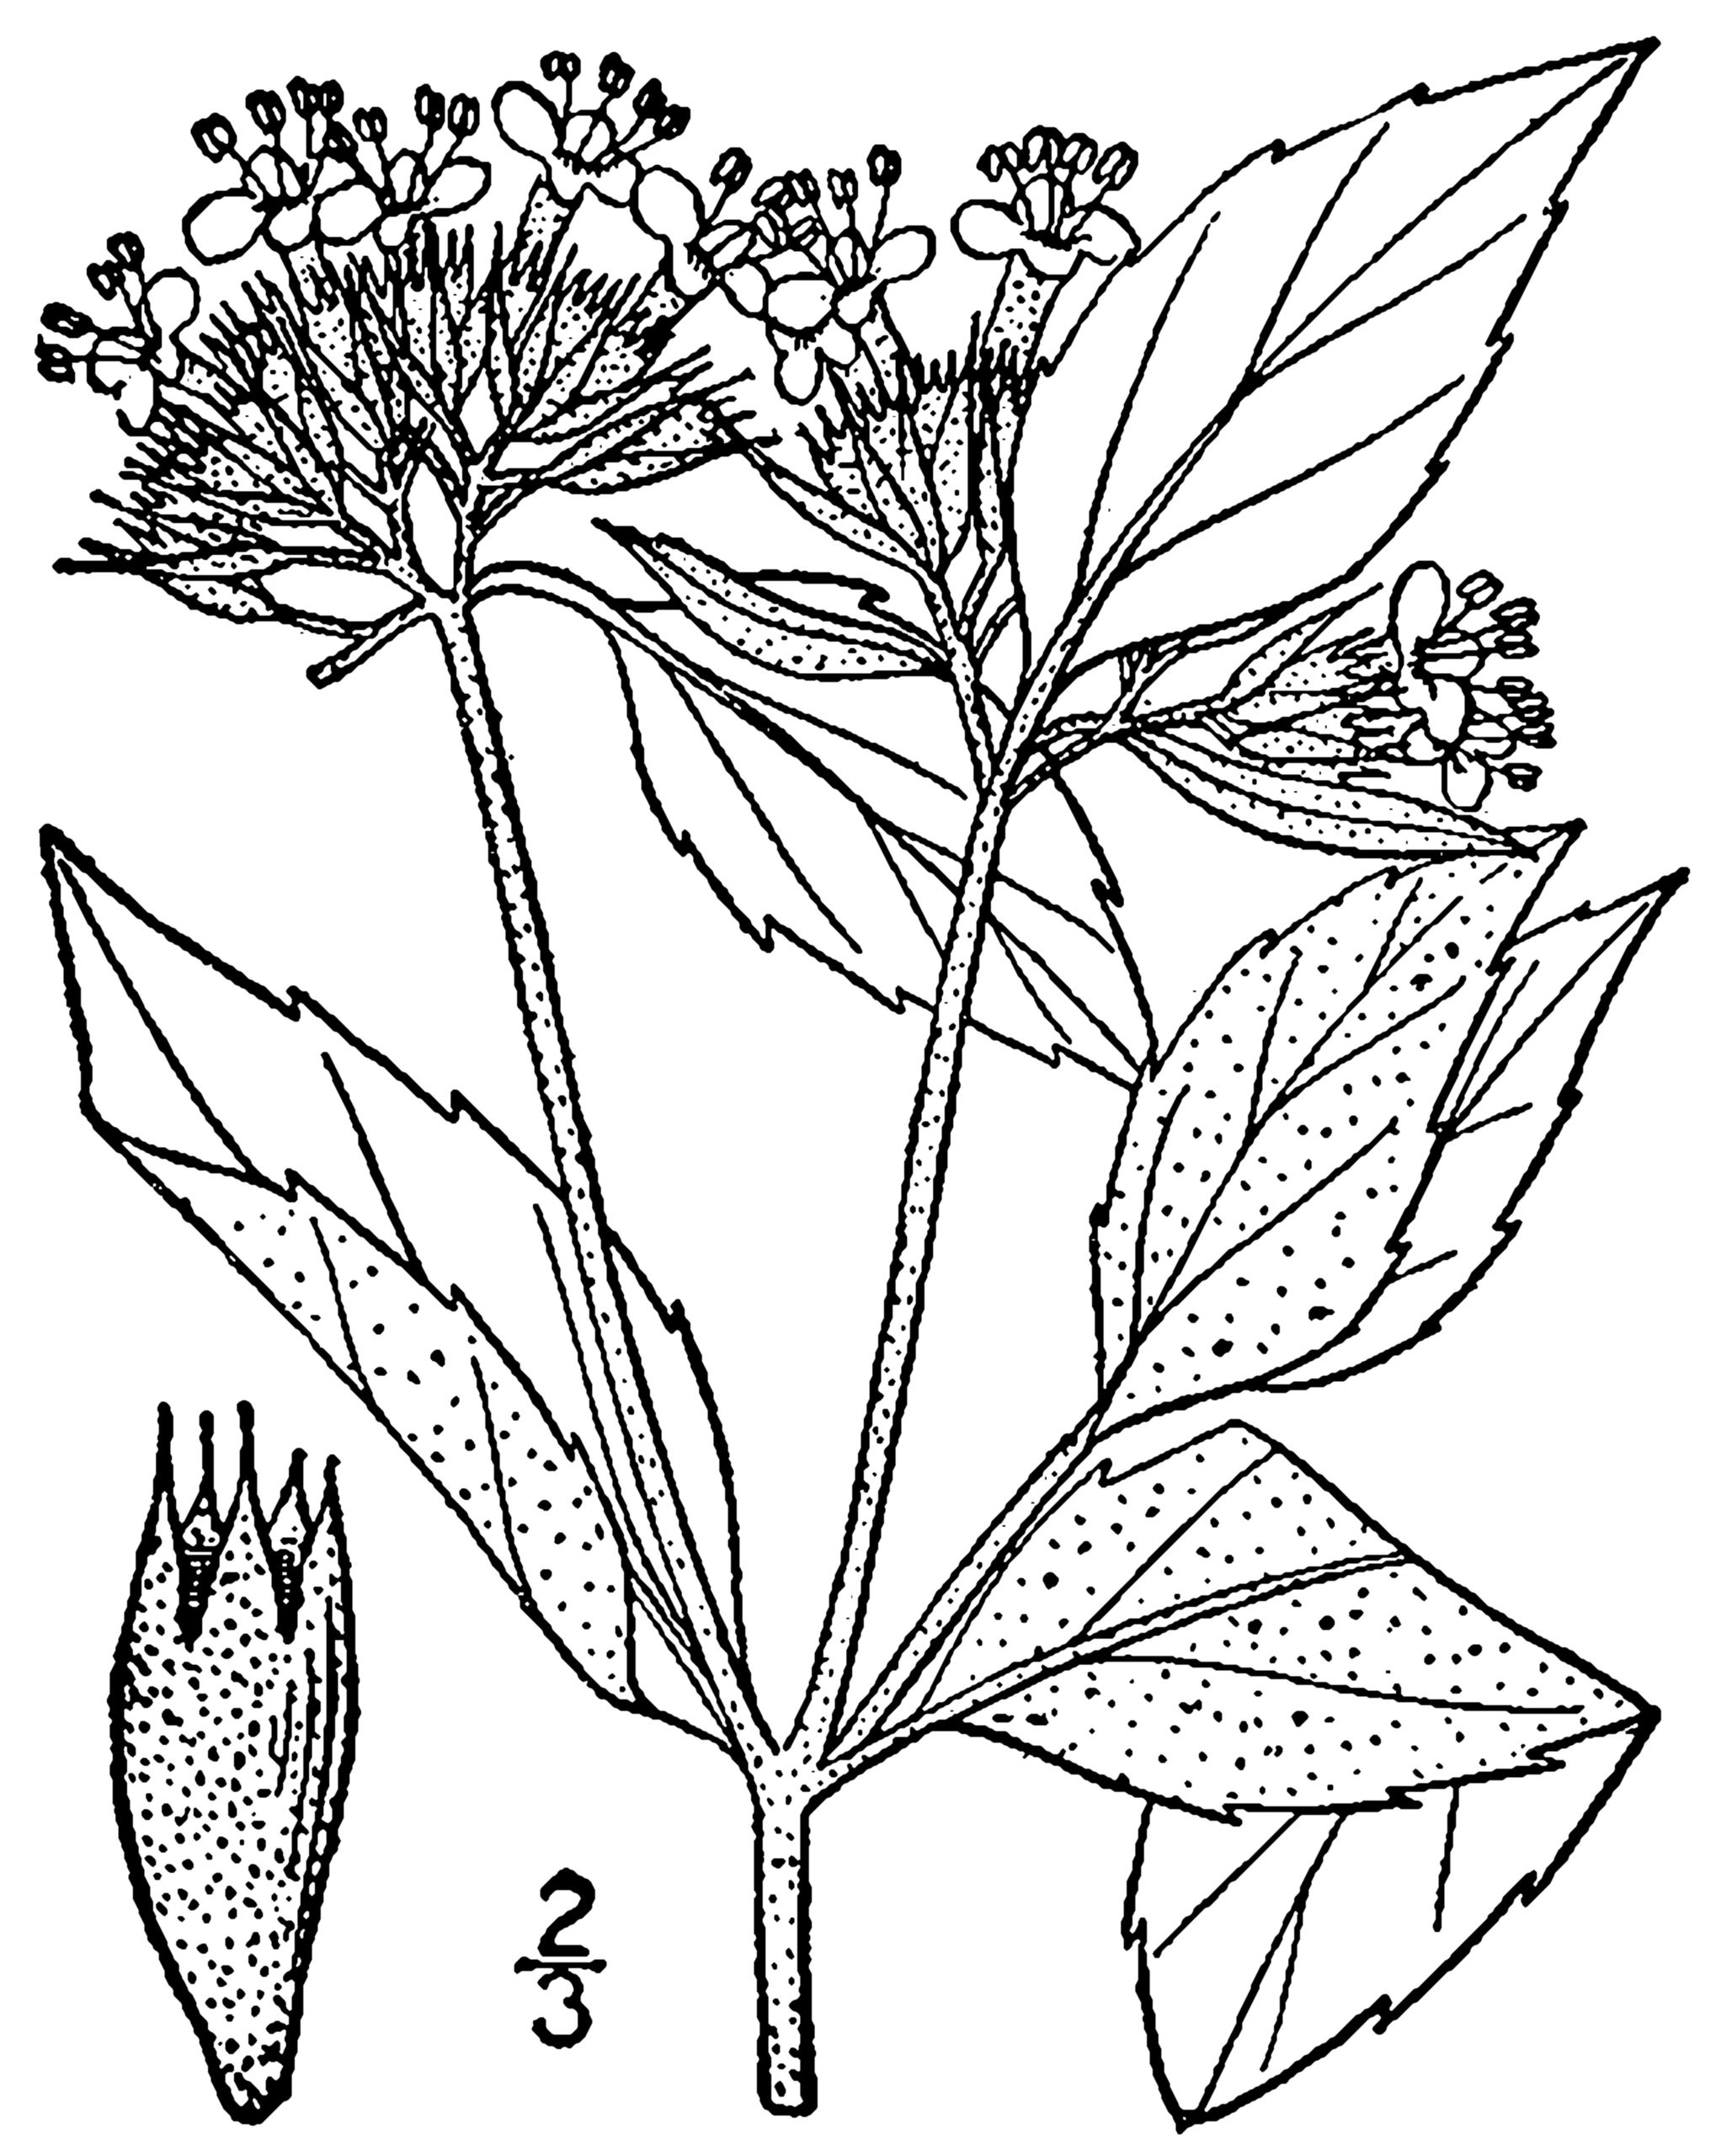 1259 original - Pycnanthemum incanum - Hoary Mountainmint